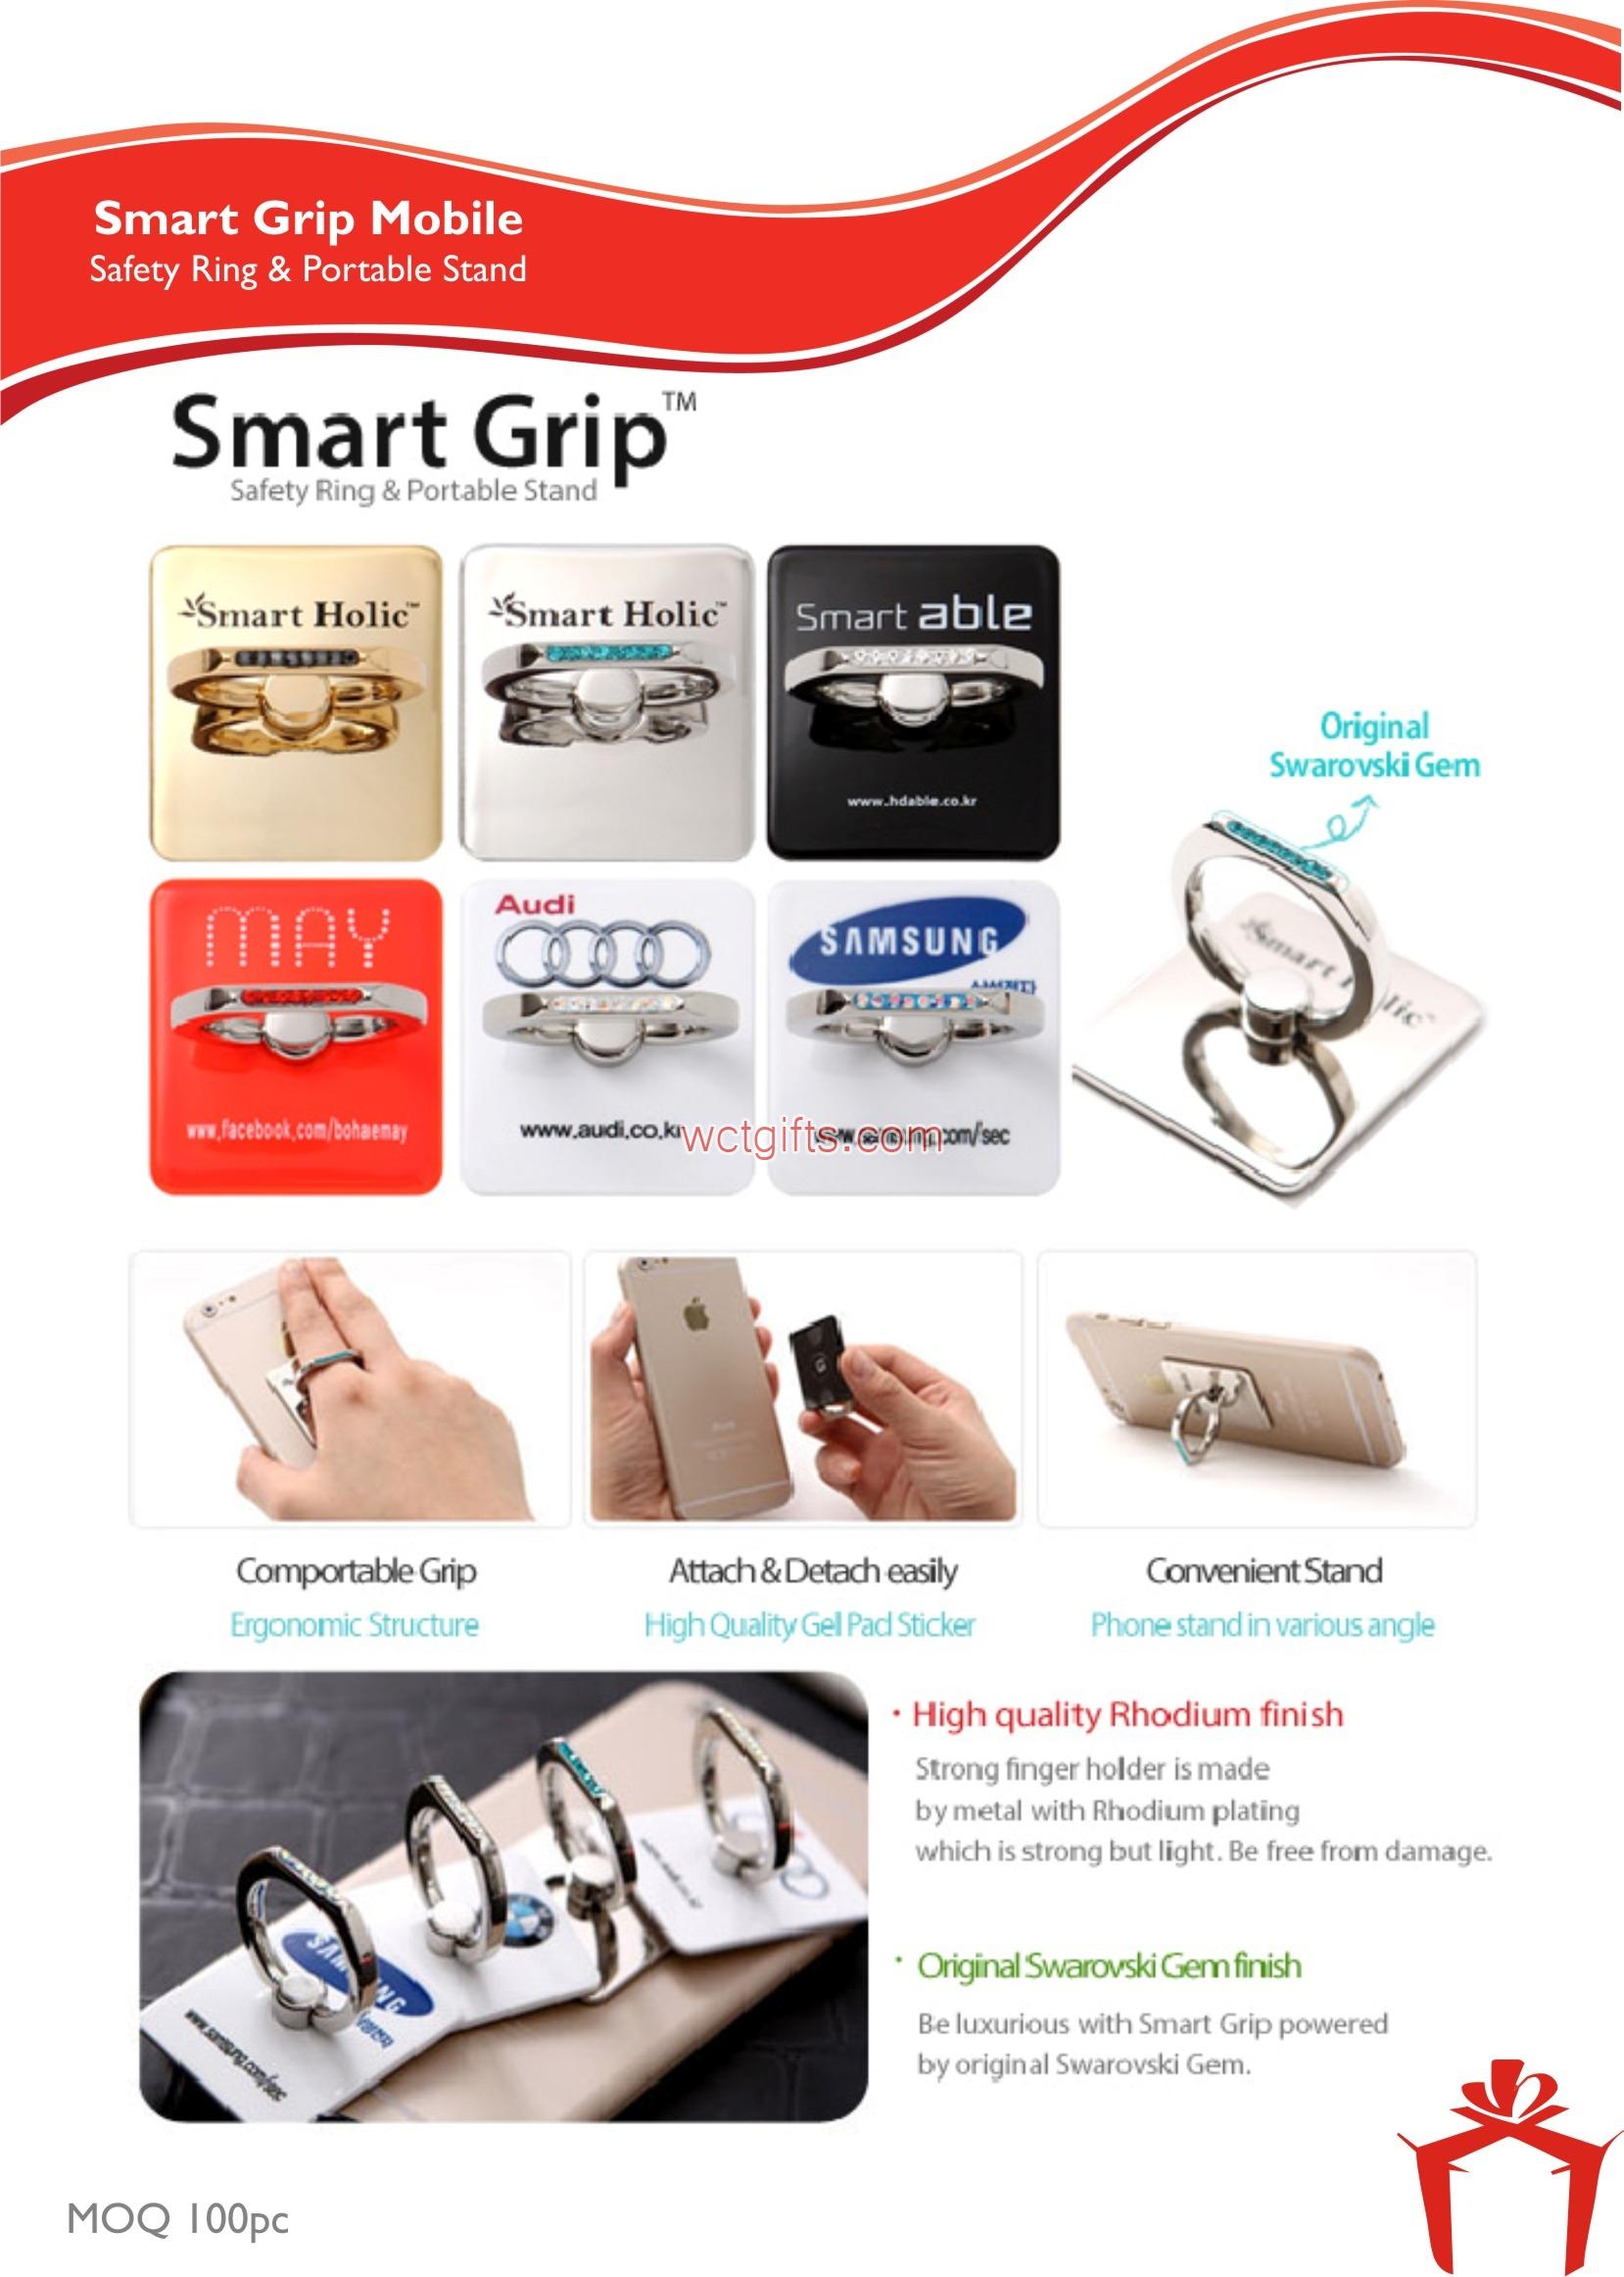 Smart Grip Mobile